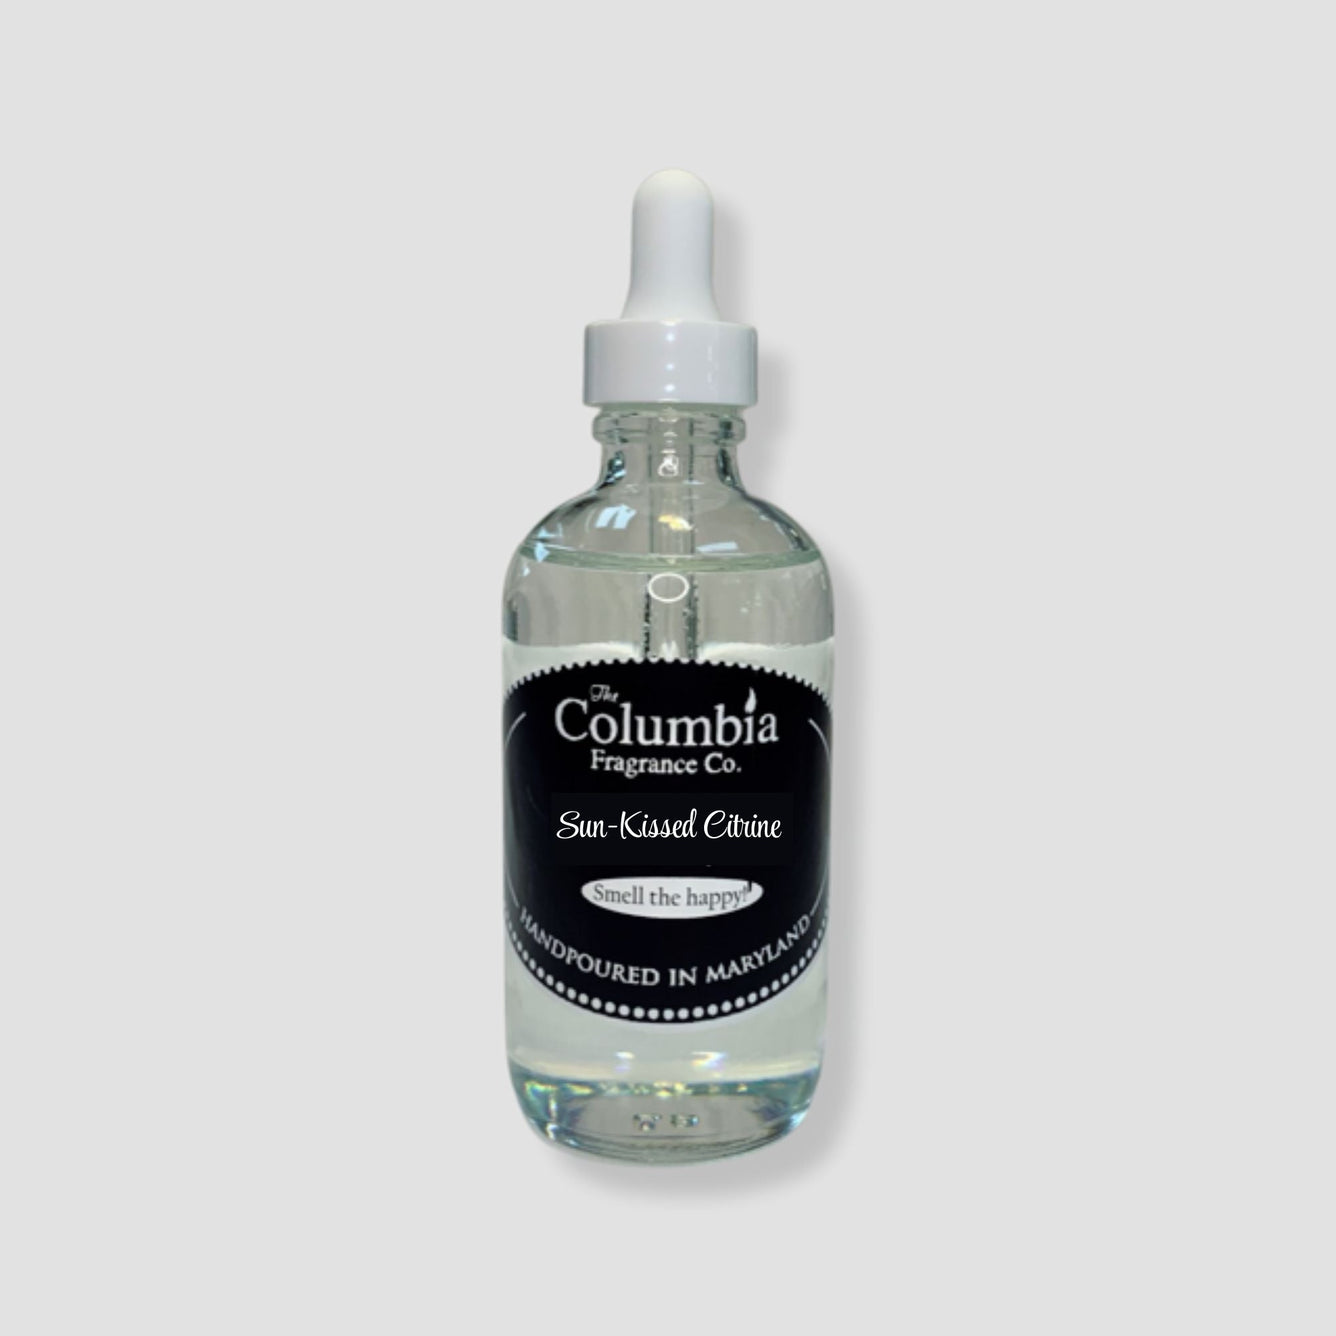 Sun-Kissed Citrine | The Columbia Fragrance Co.